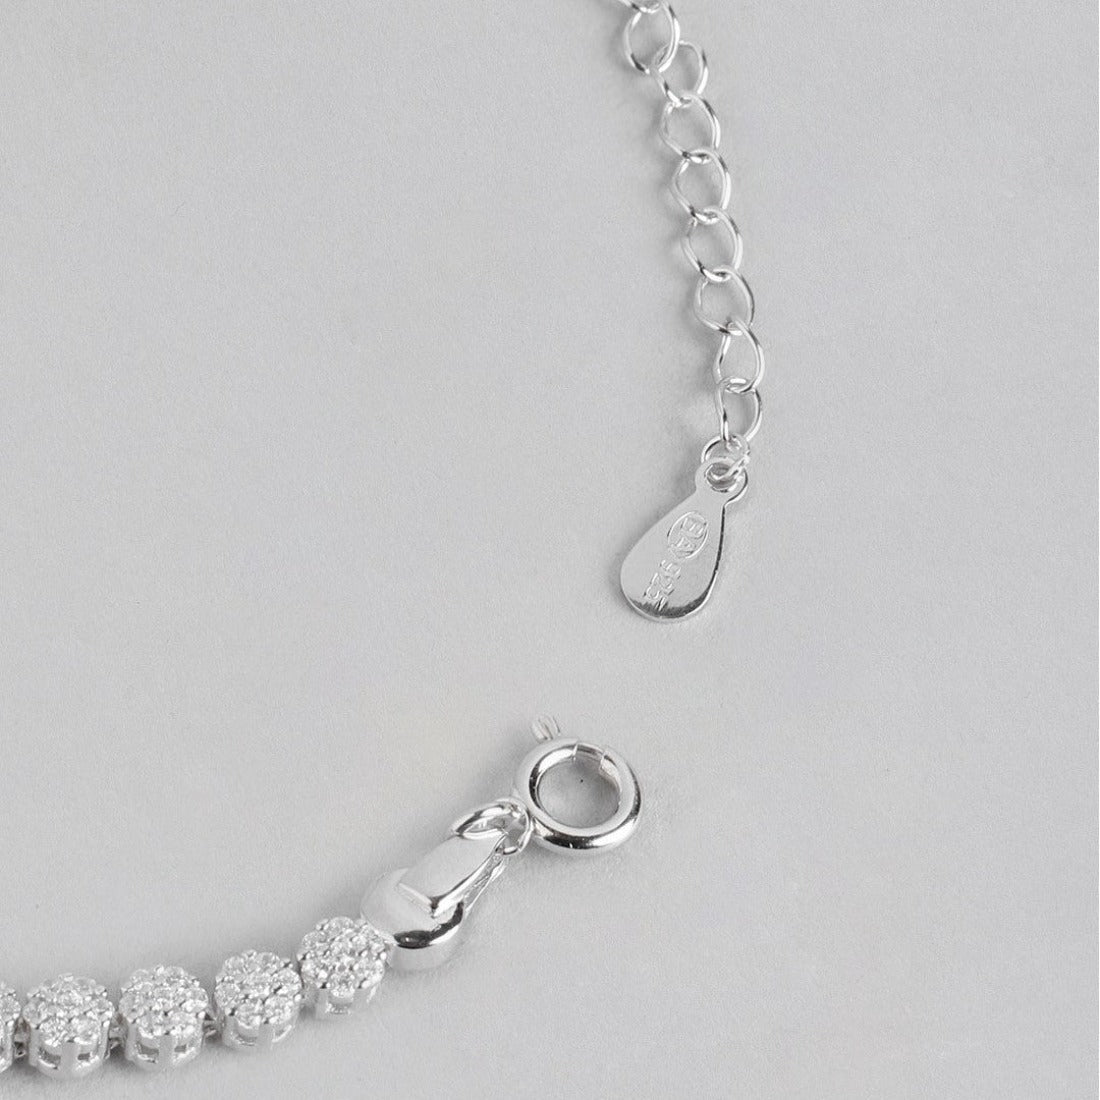 Sparkling Love 925 Silver Bracelet - Valentine Edition With Gift Box